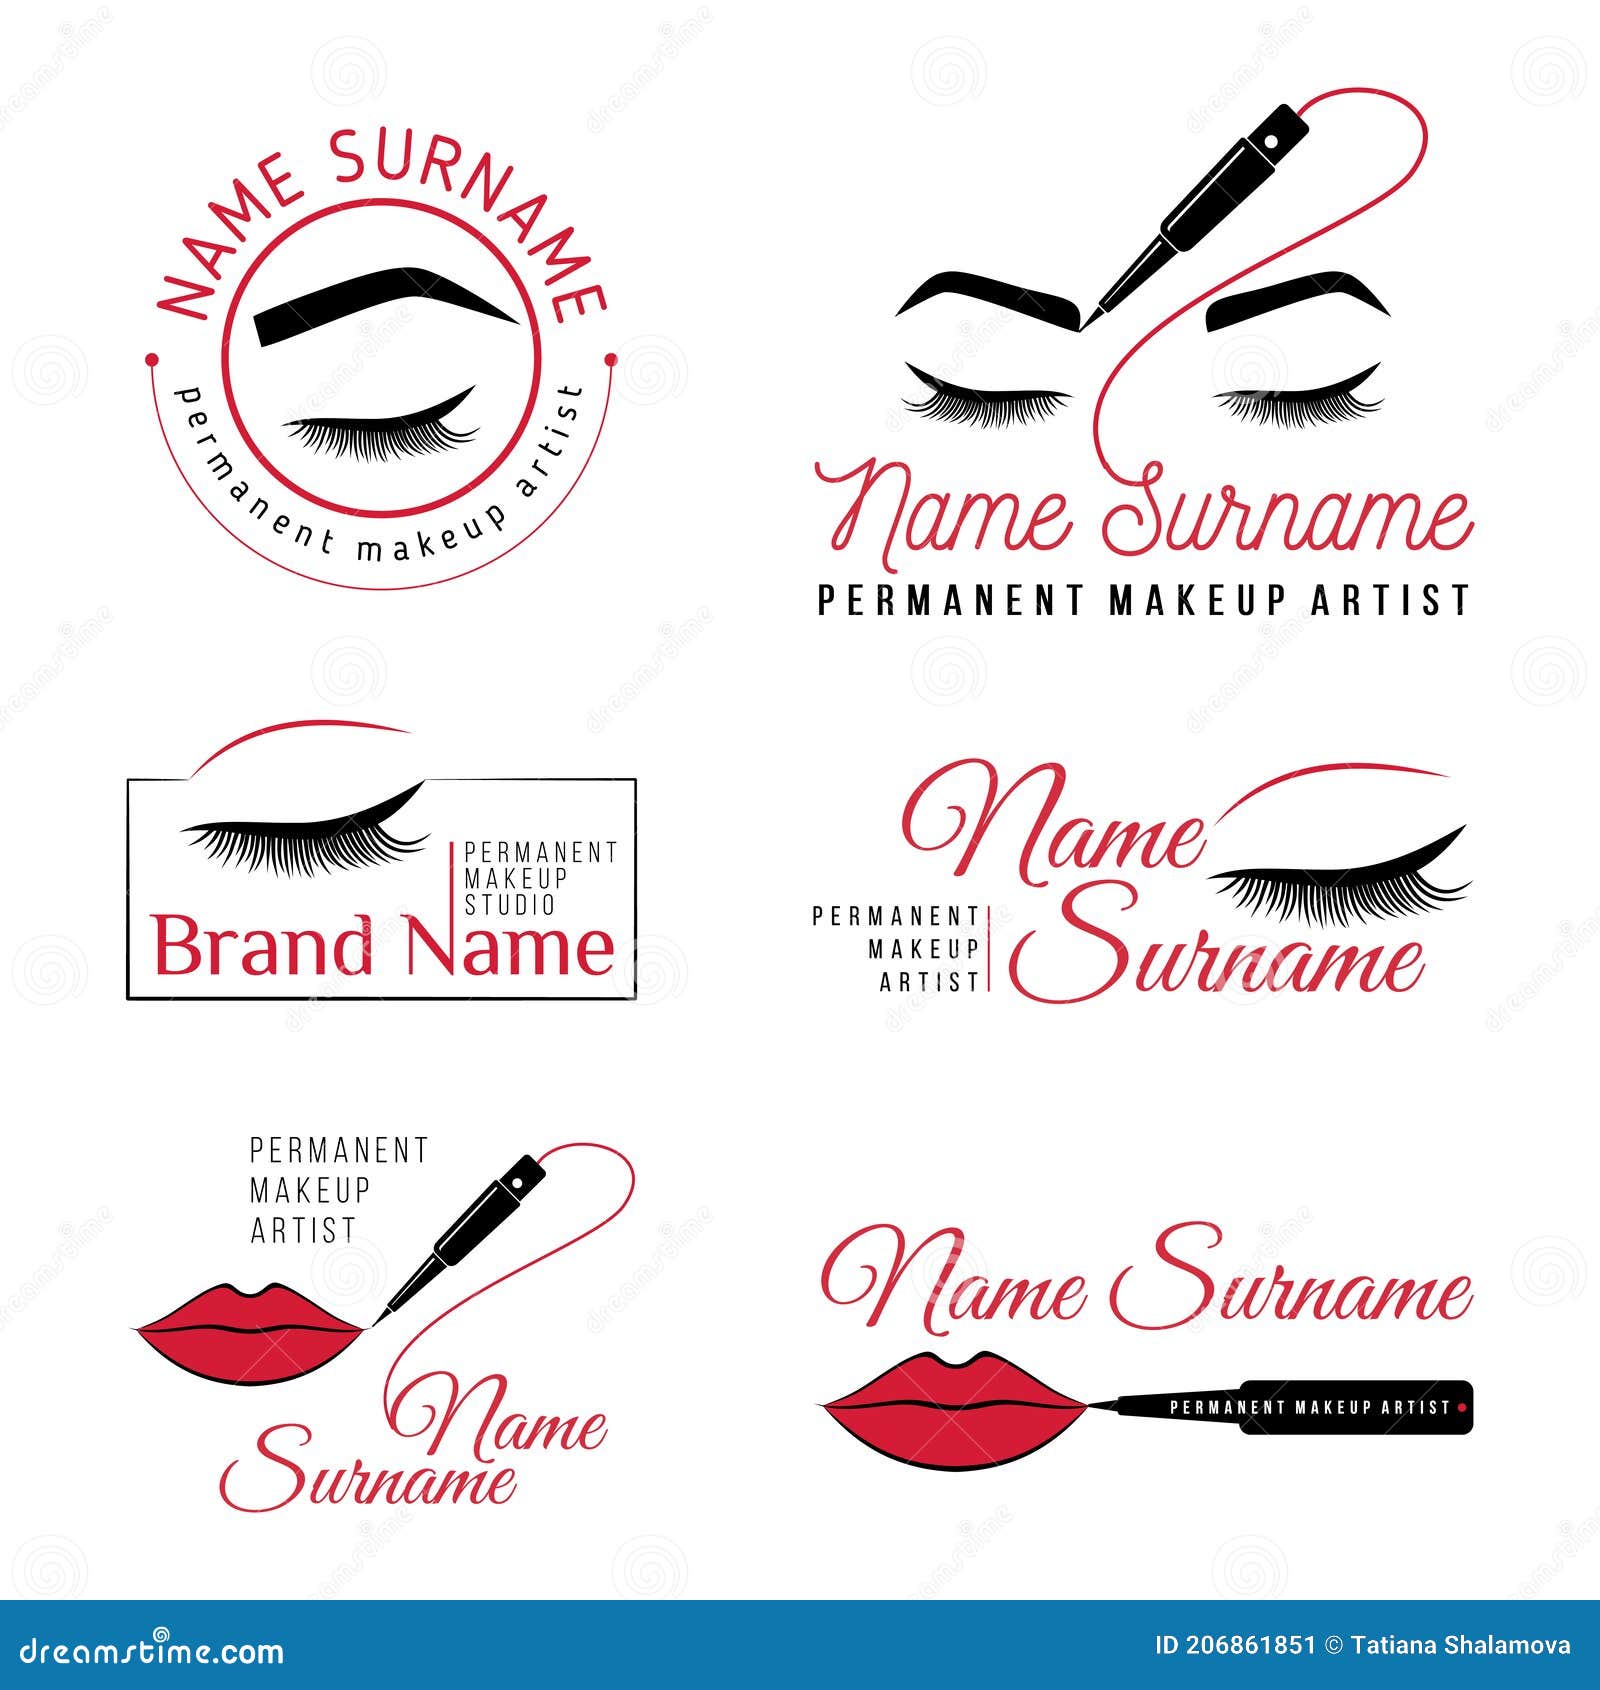 permanent makeup logo ideas 2